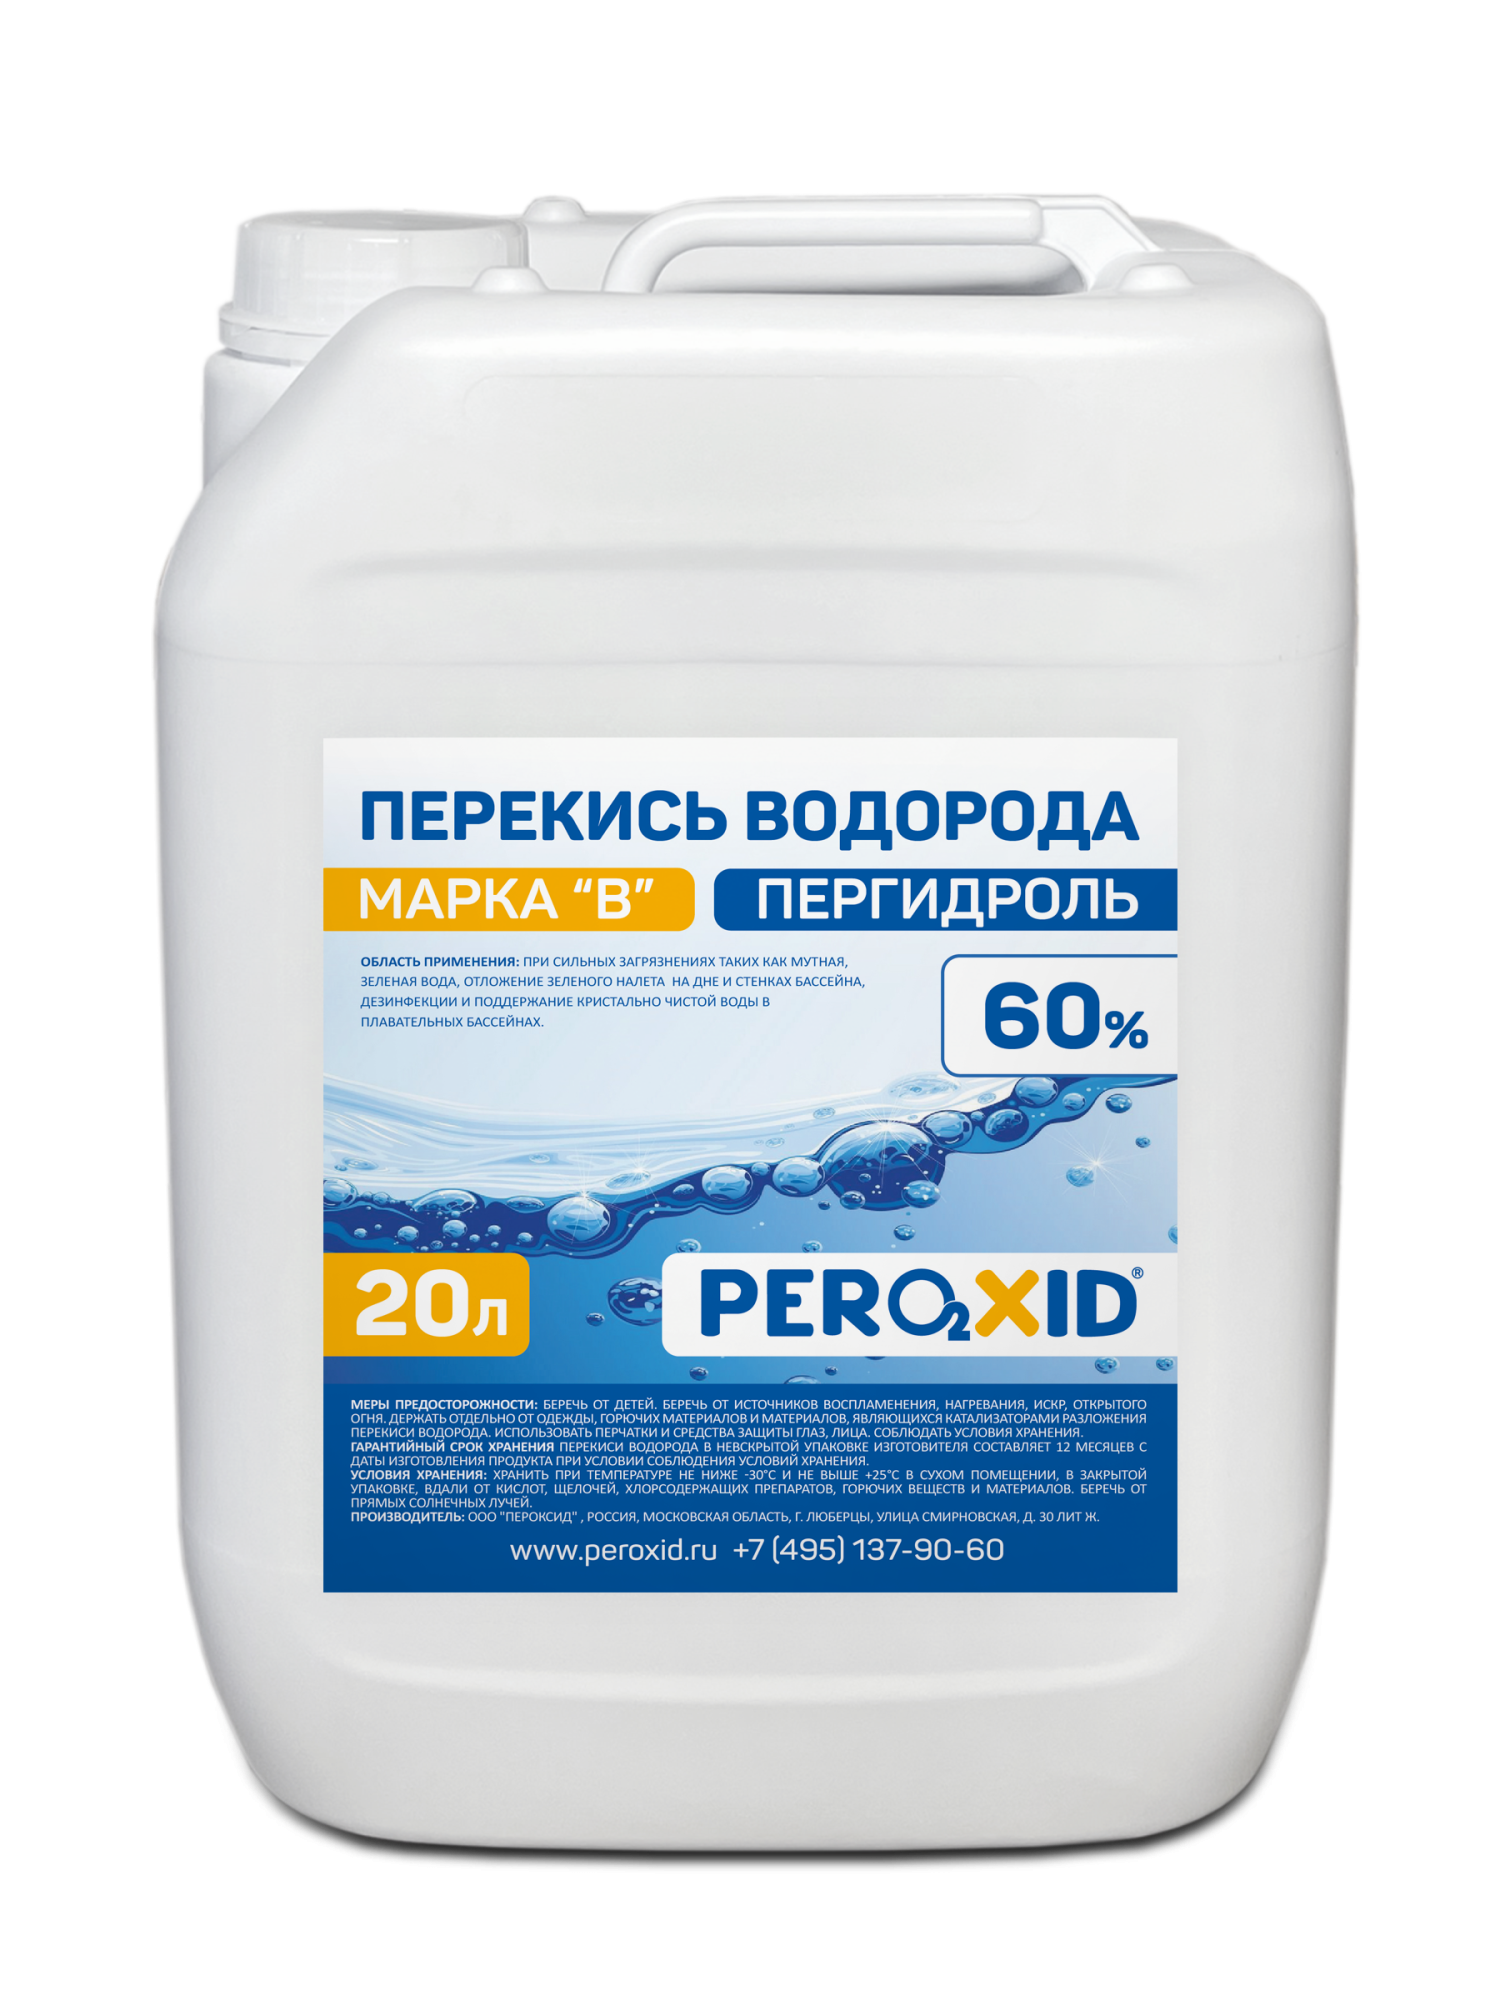 Перекись водорода (пергидроль) PEROXID 60% марка В ТУ 2123-002-25665344-2008 20 л/24 кг